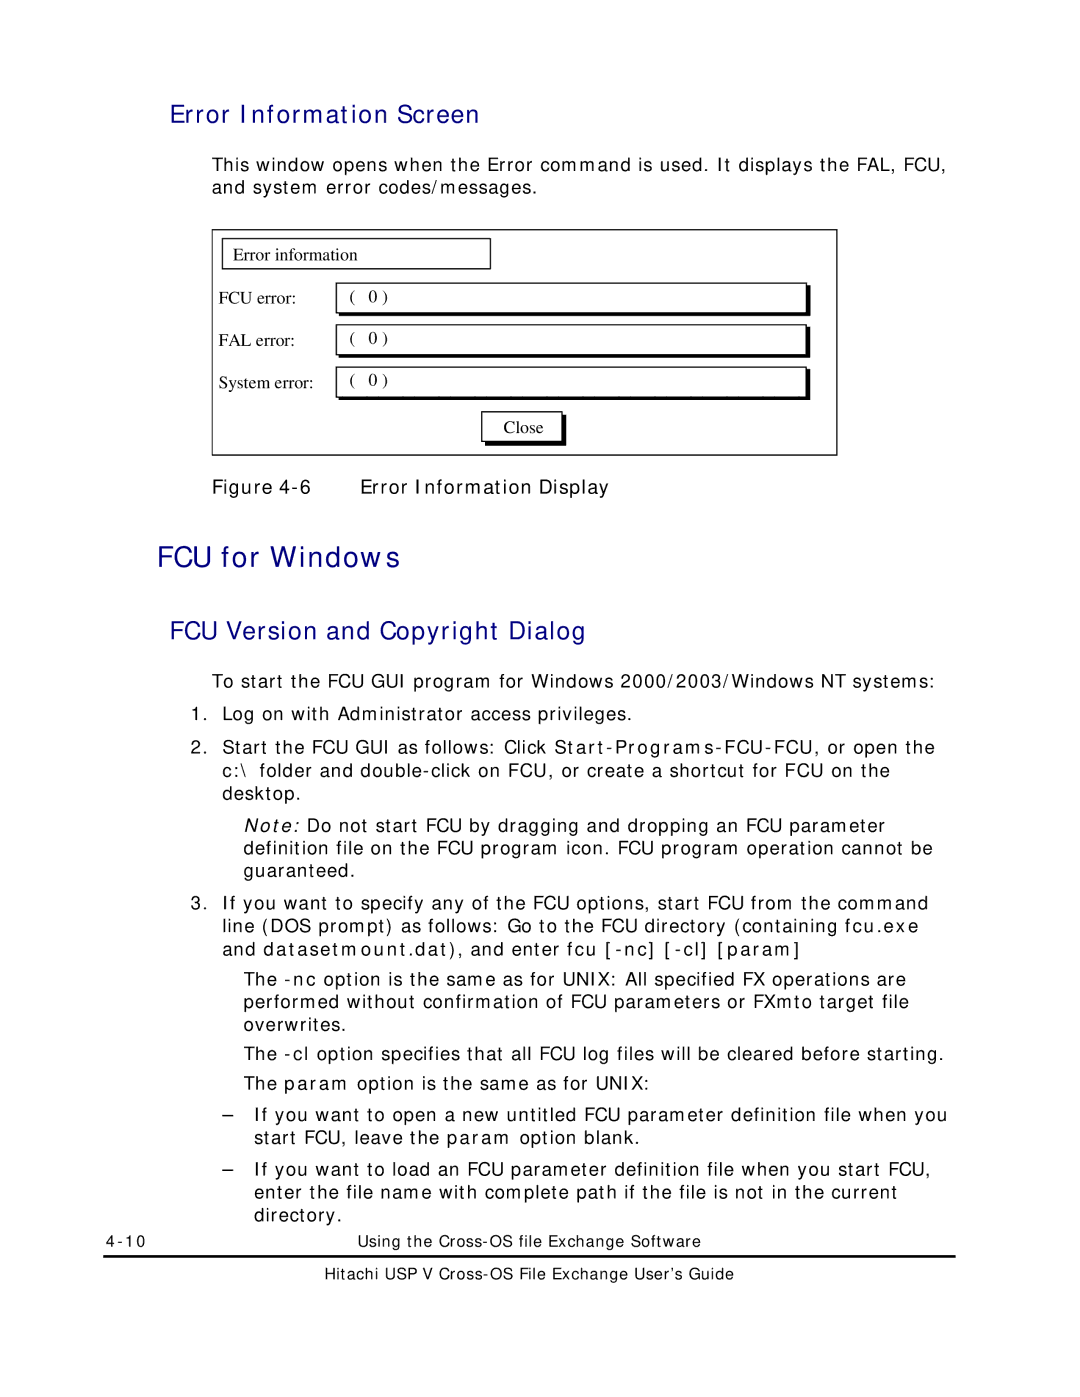 Hitachi MK-96RD647-01 manual FCU for Windows, Error Information Screen, FCU Version and Copyright Dialog 